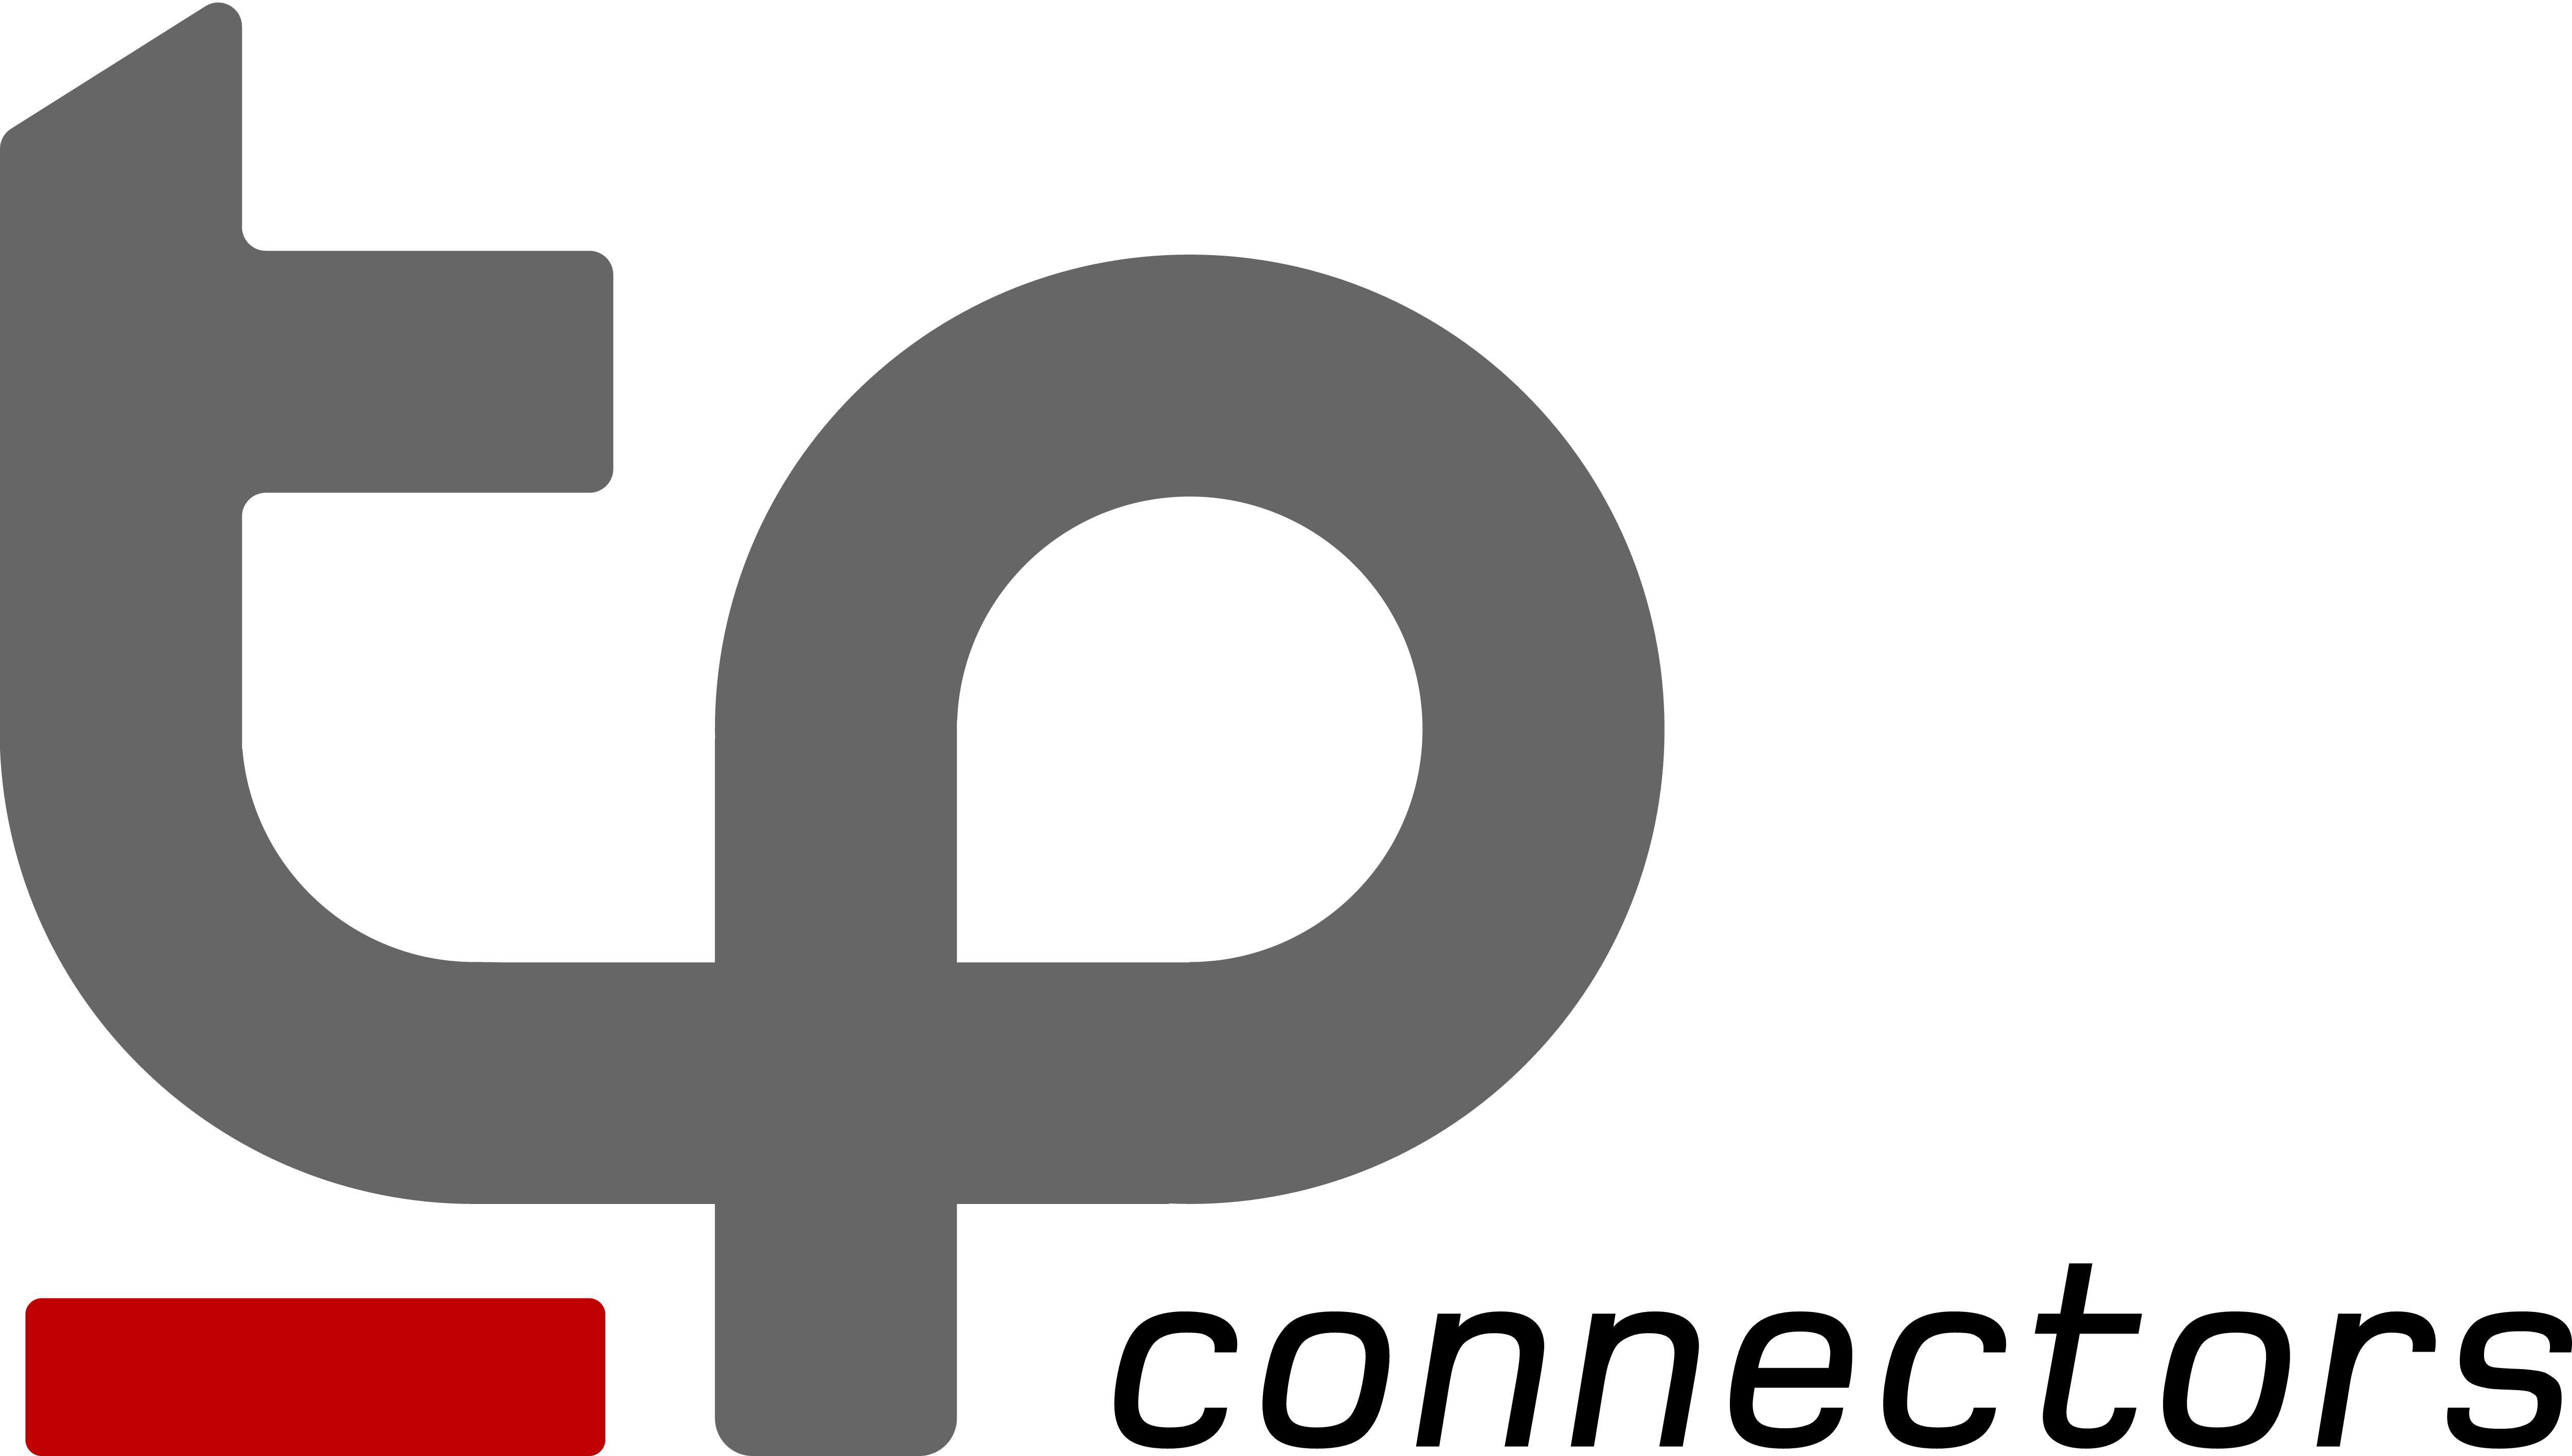 TP Logo - New logo for TP companies